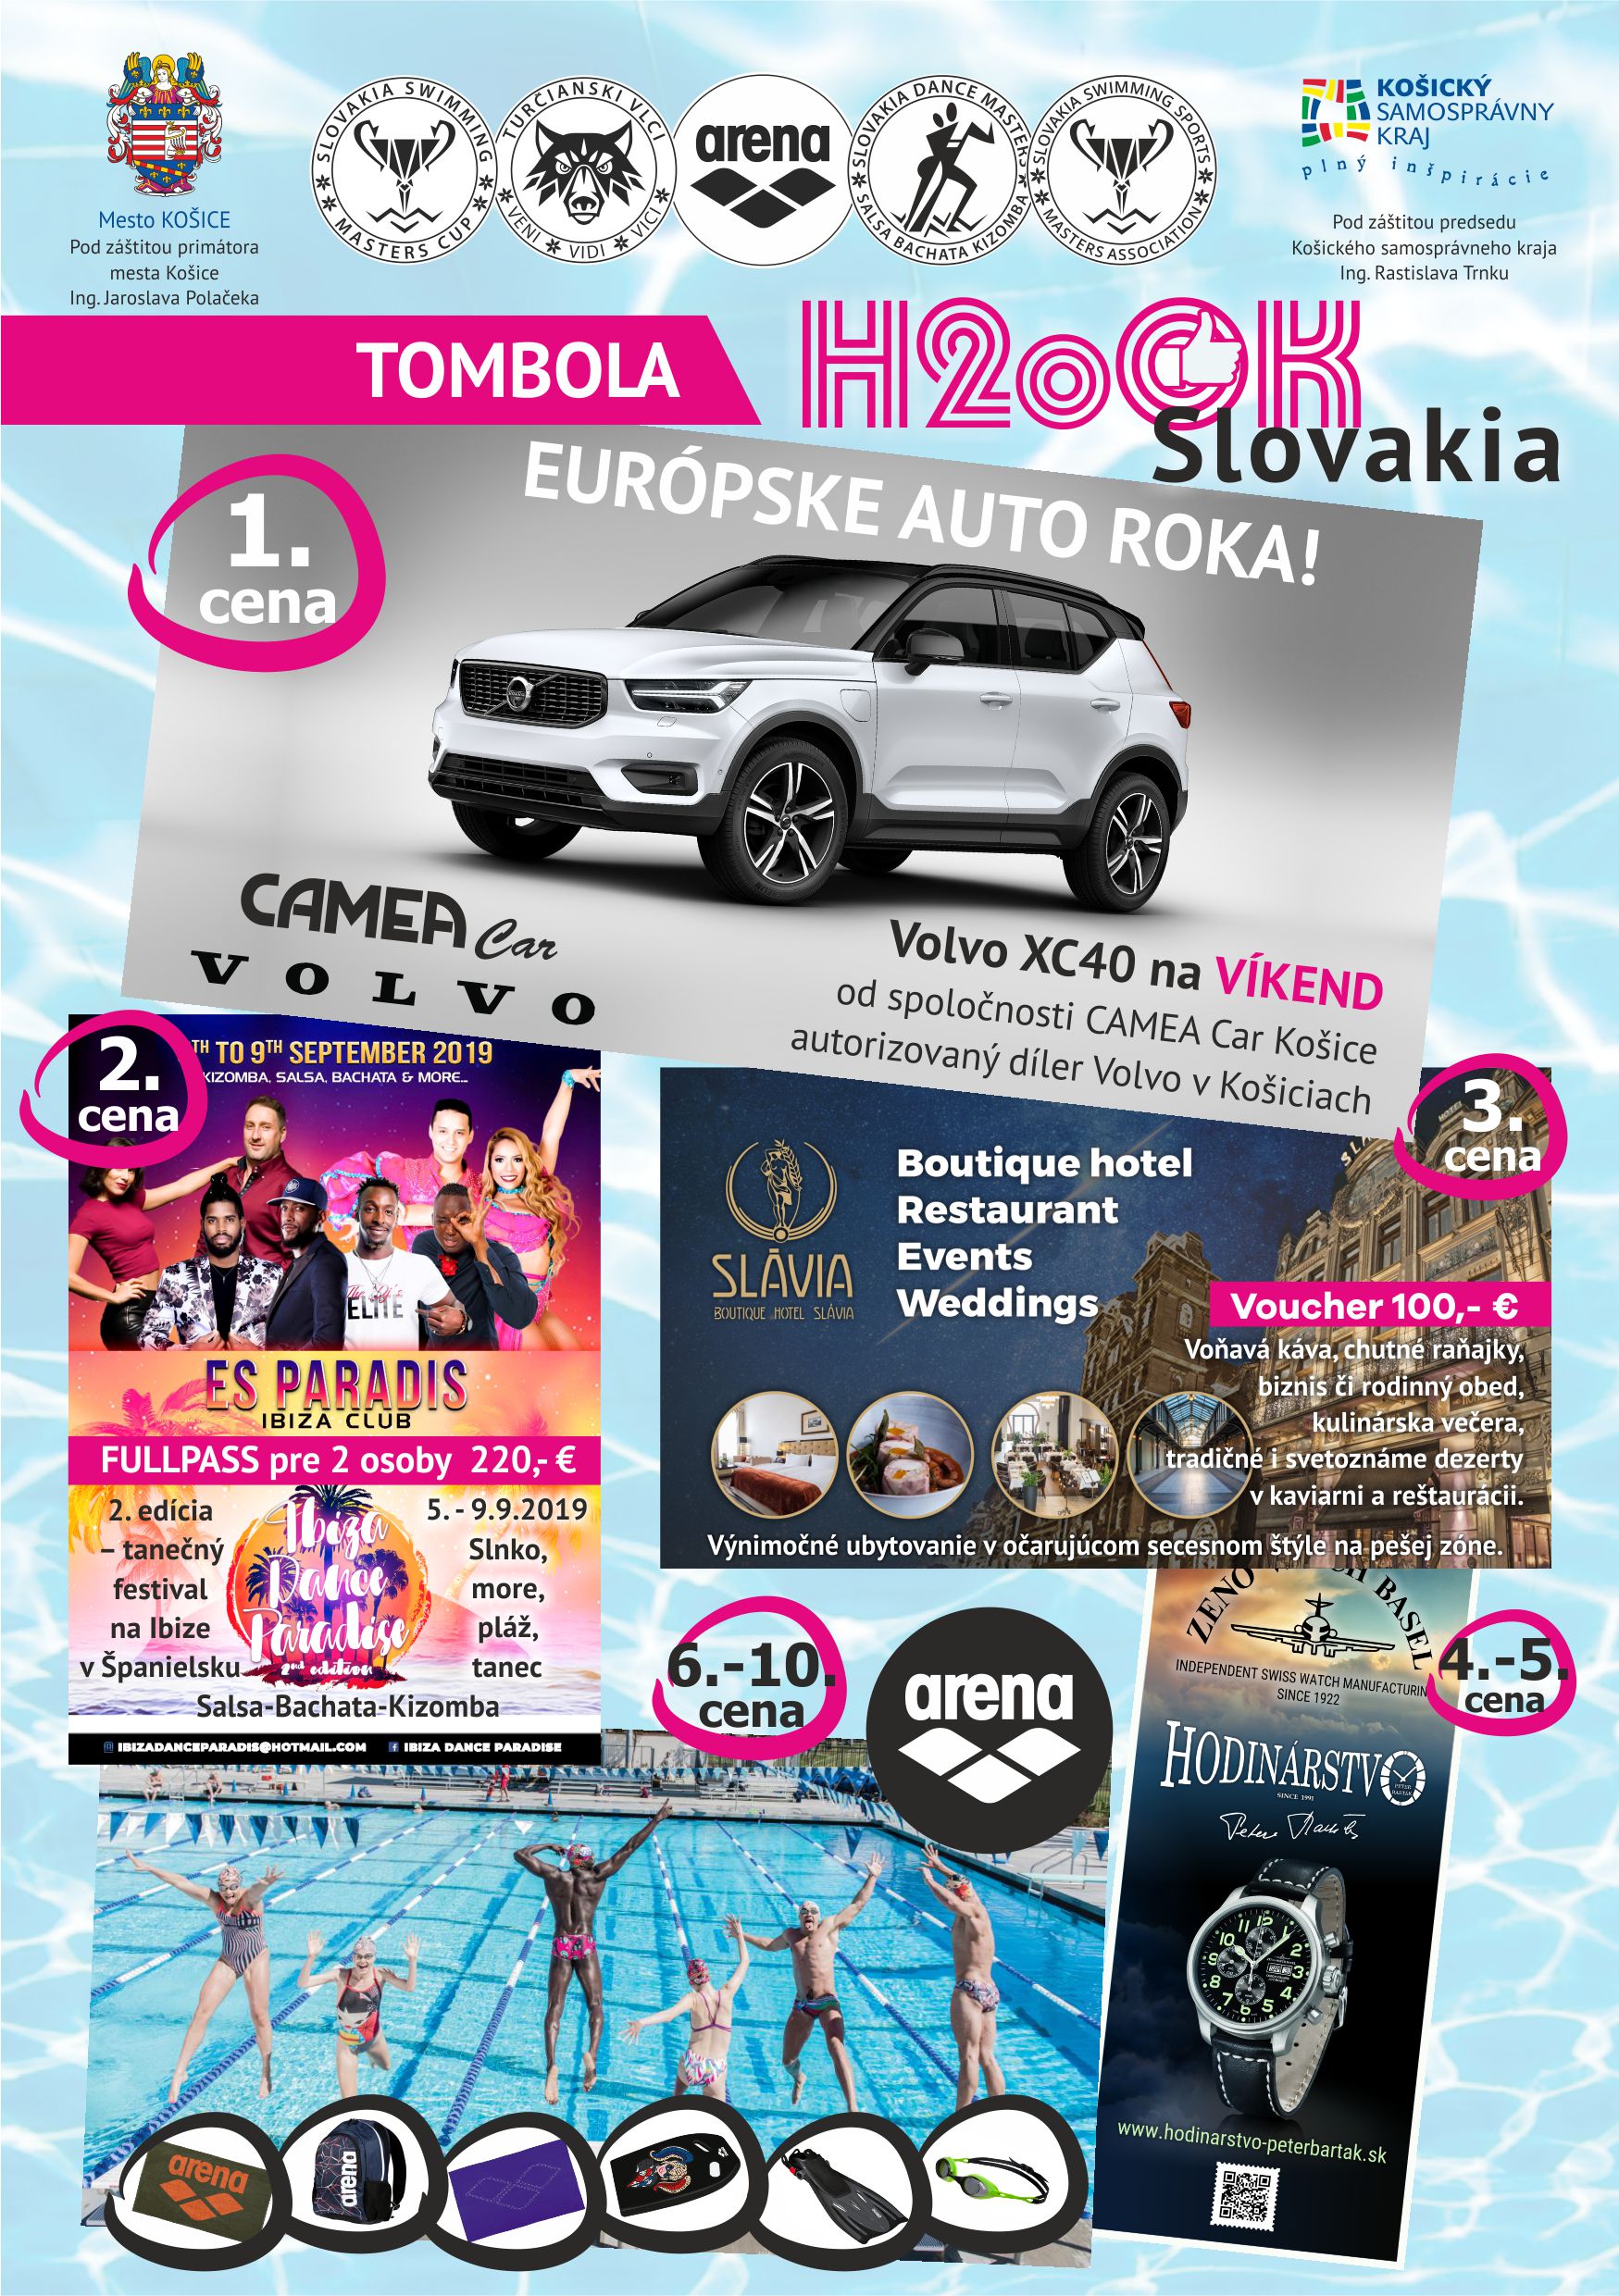 1. H2oOK SLOVAKIA - Tombola